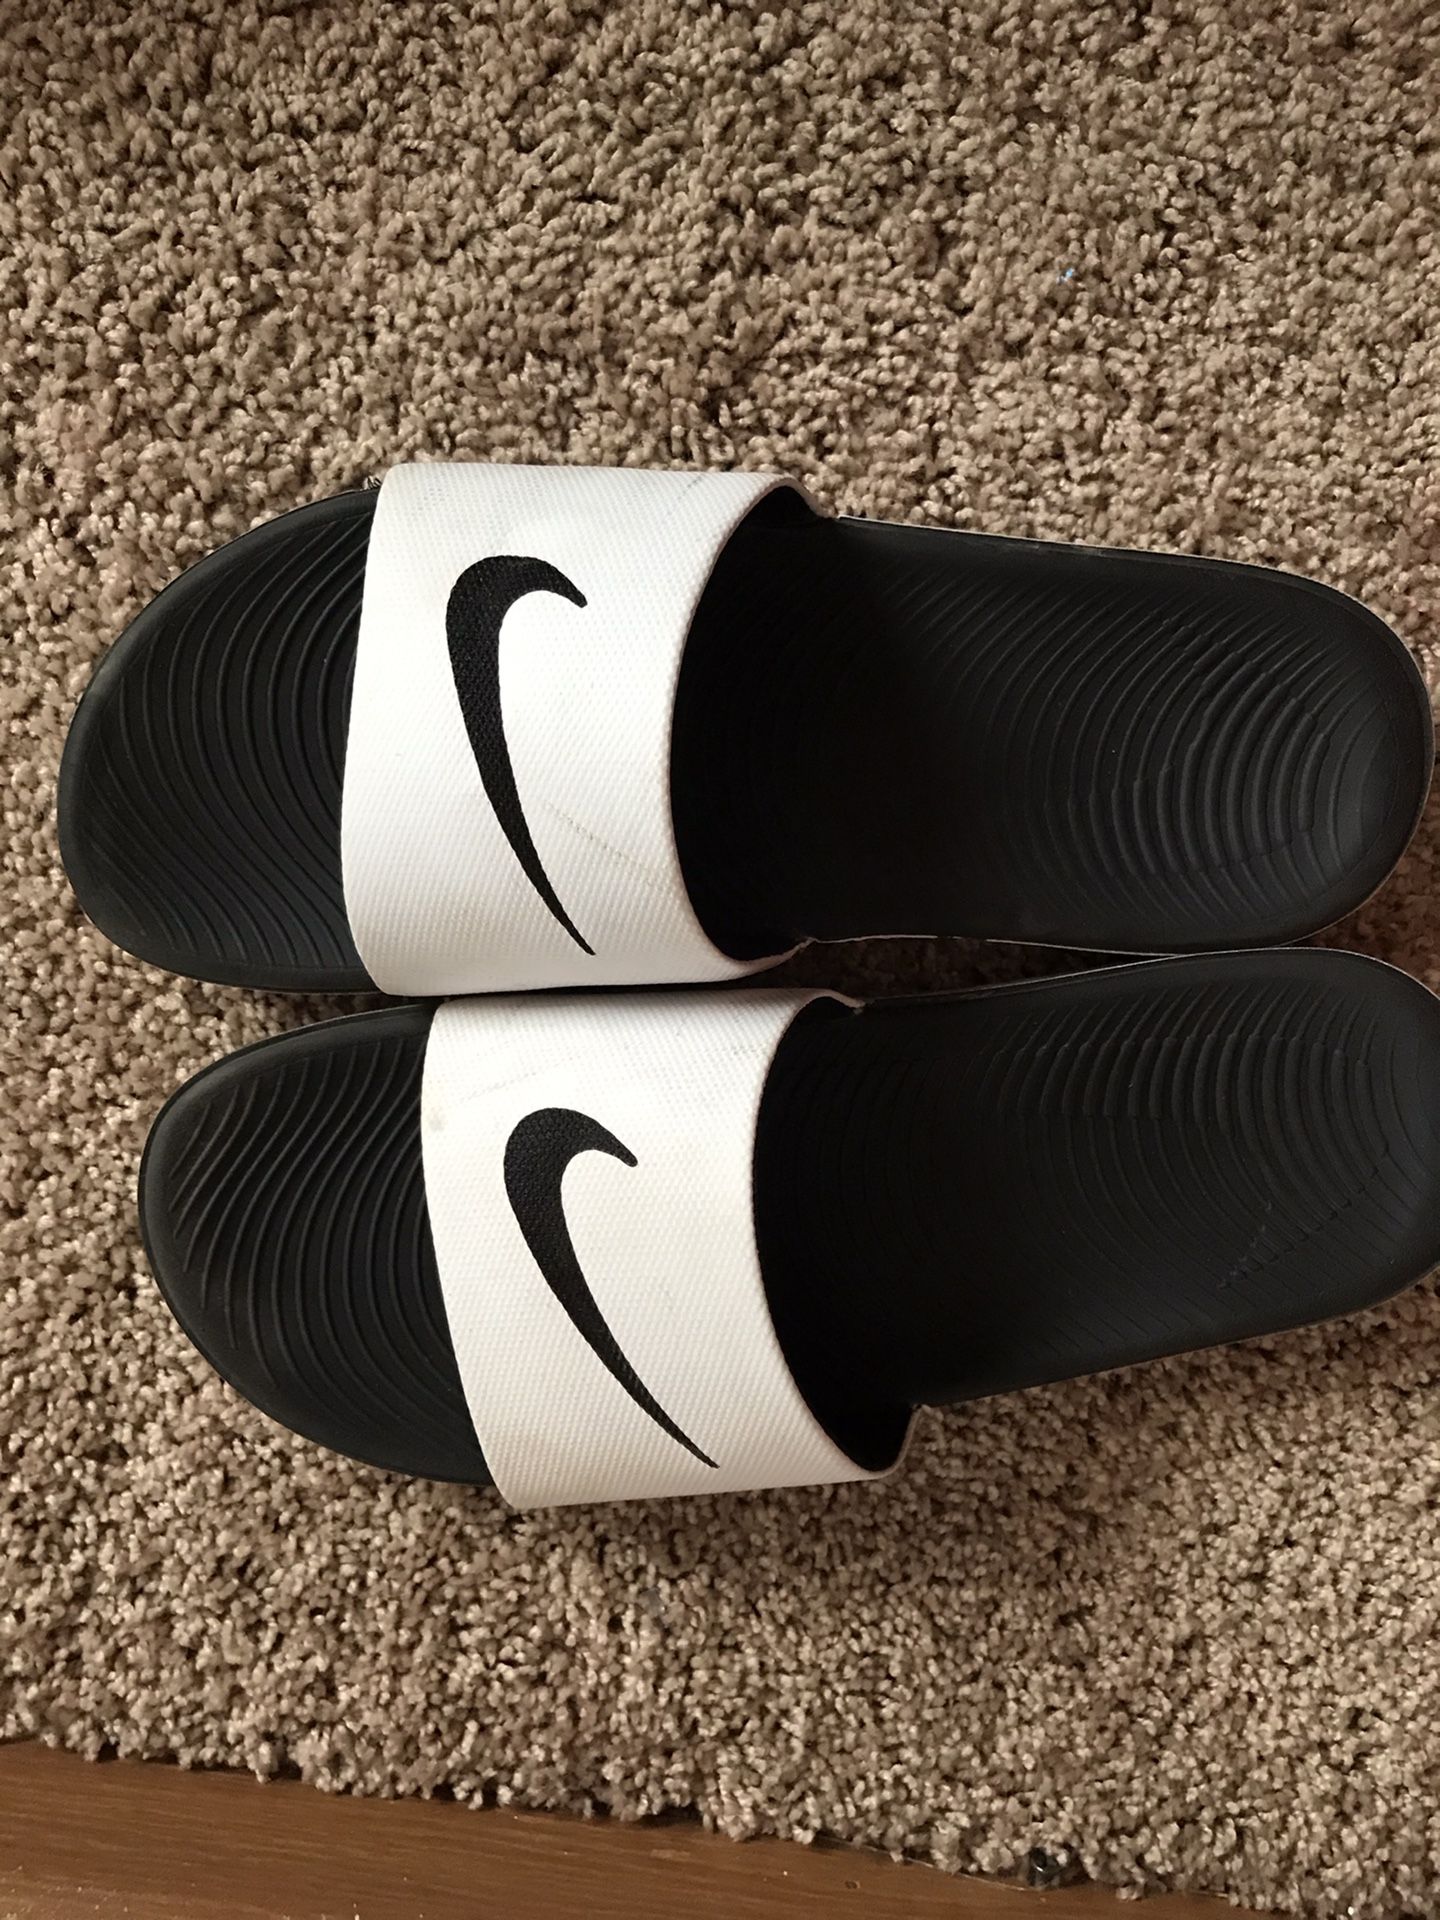 White Nike Slides